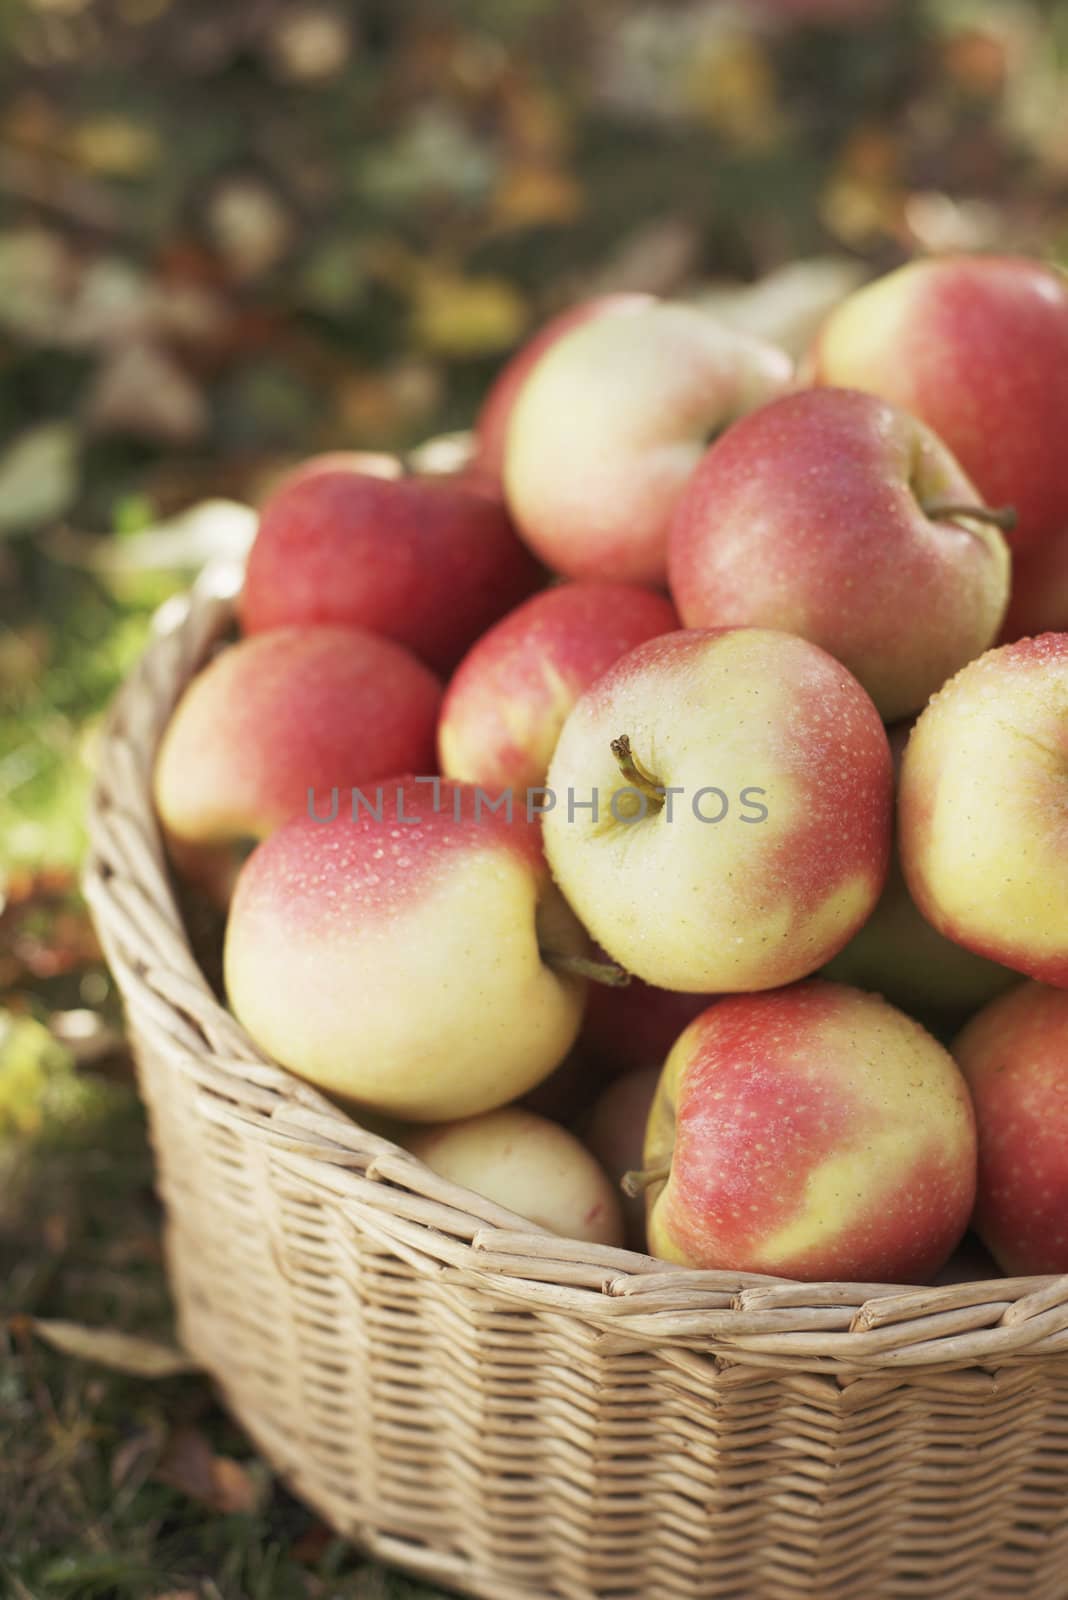 Ripe harvested apples in a wicker basket